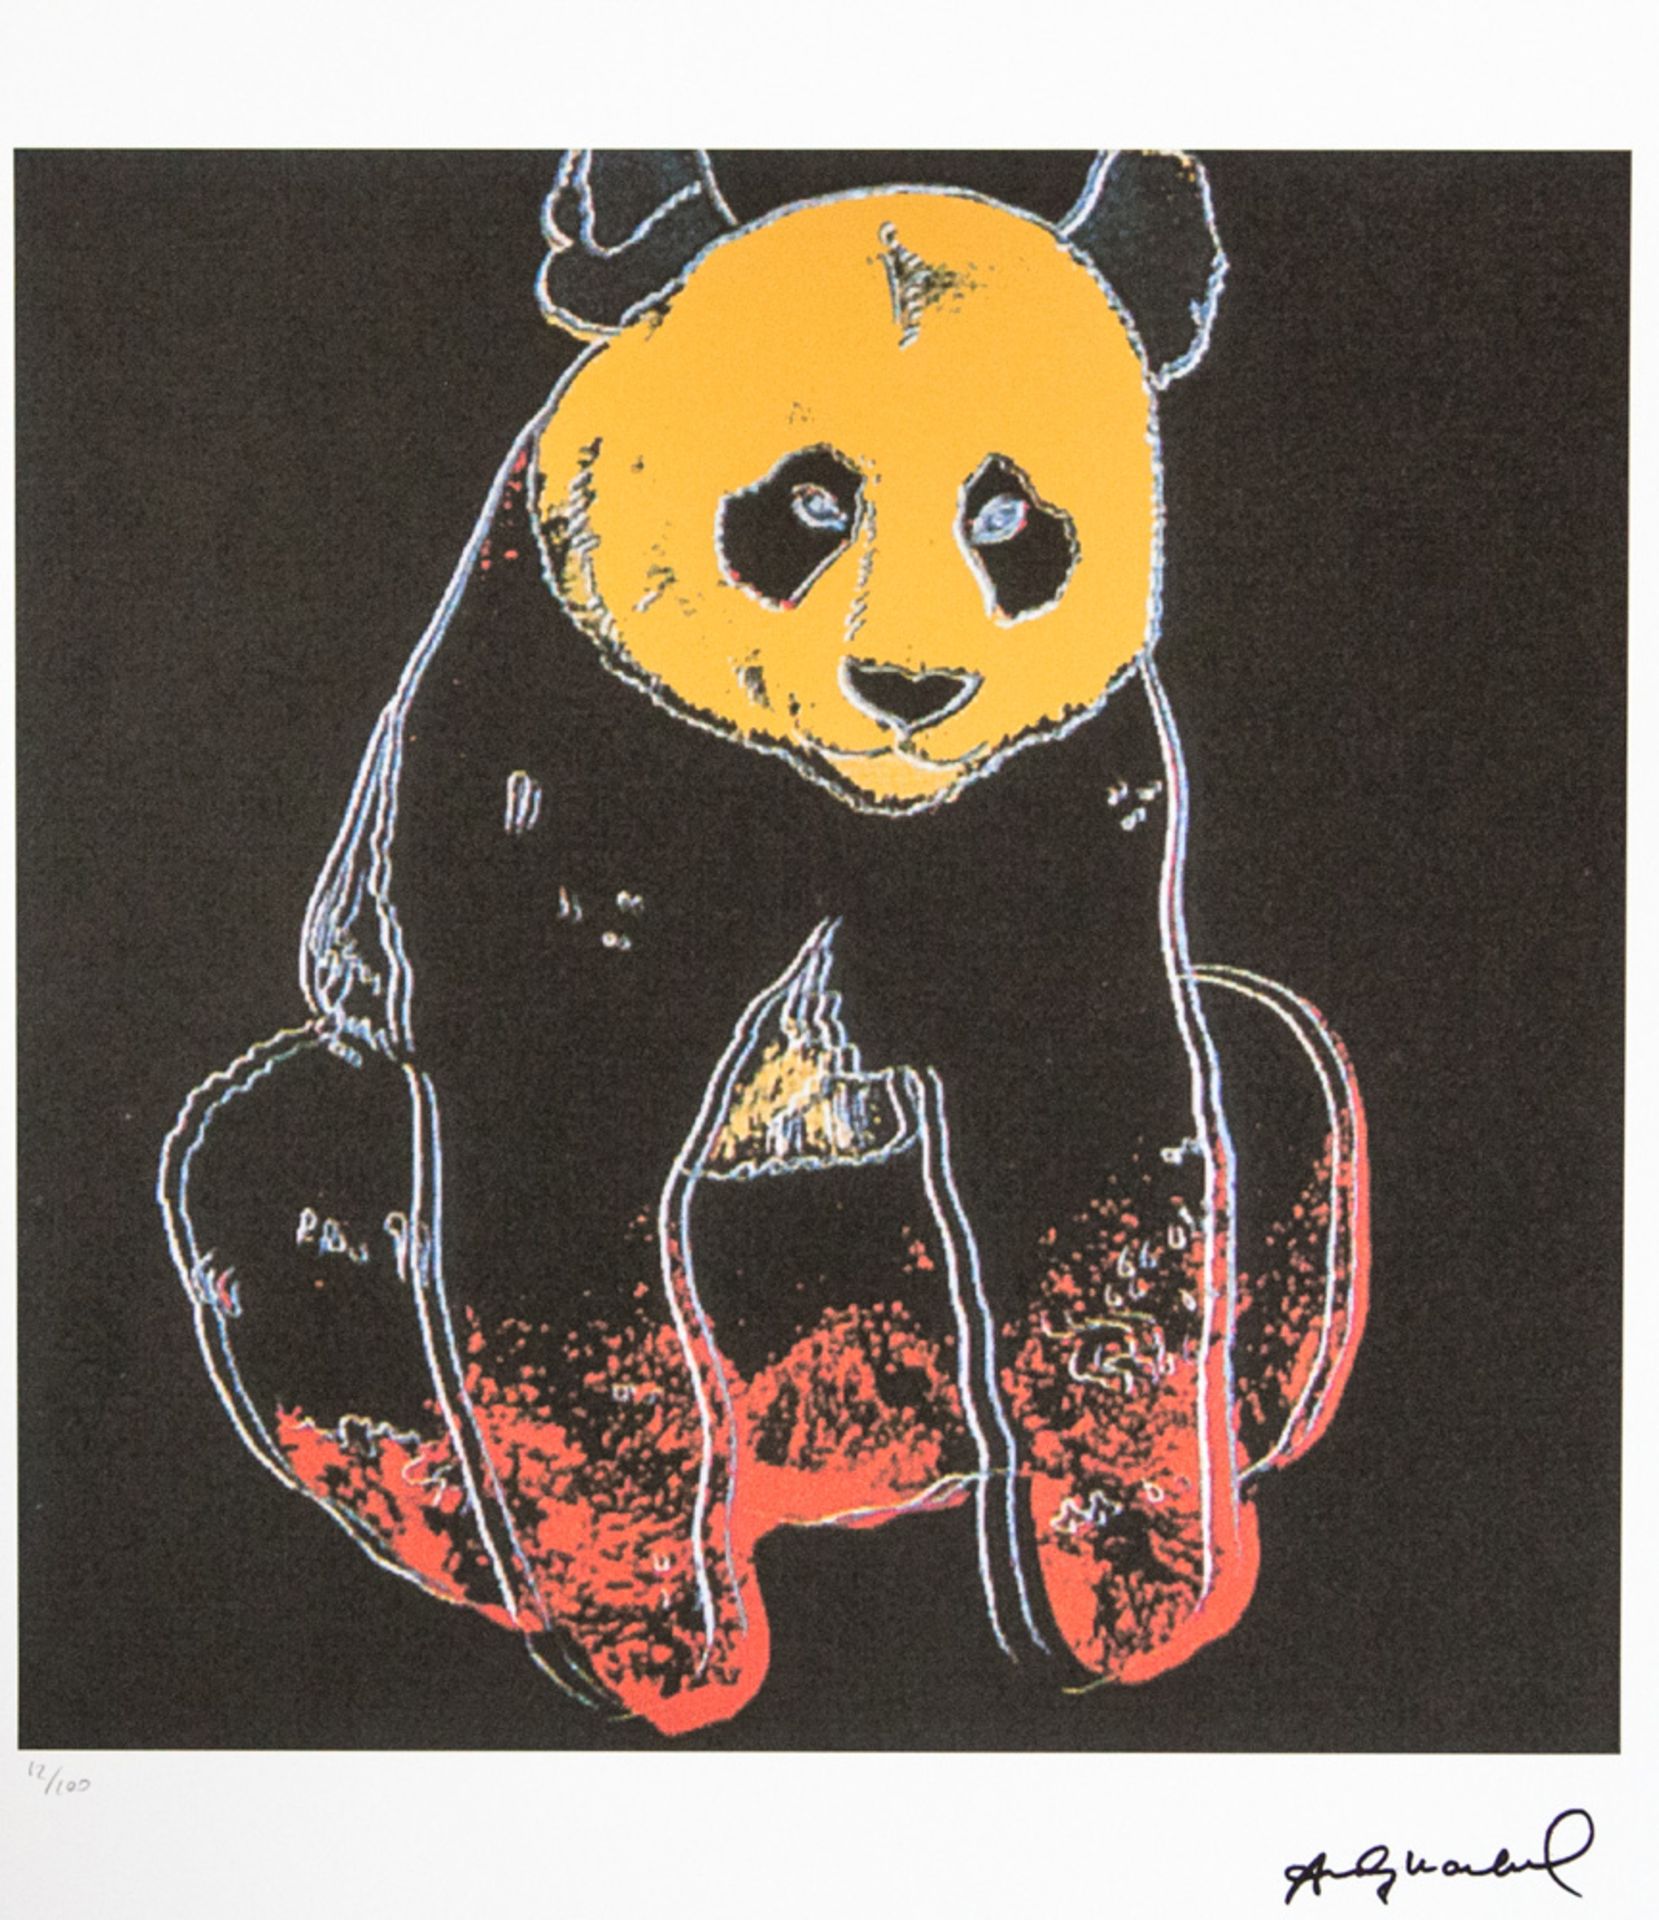 Andy Warhol 'Giant Panda'